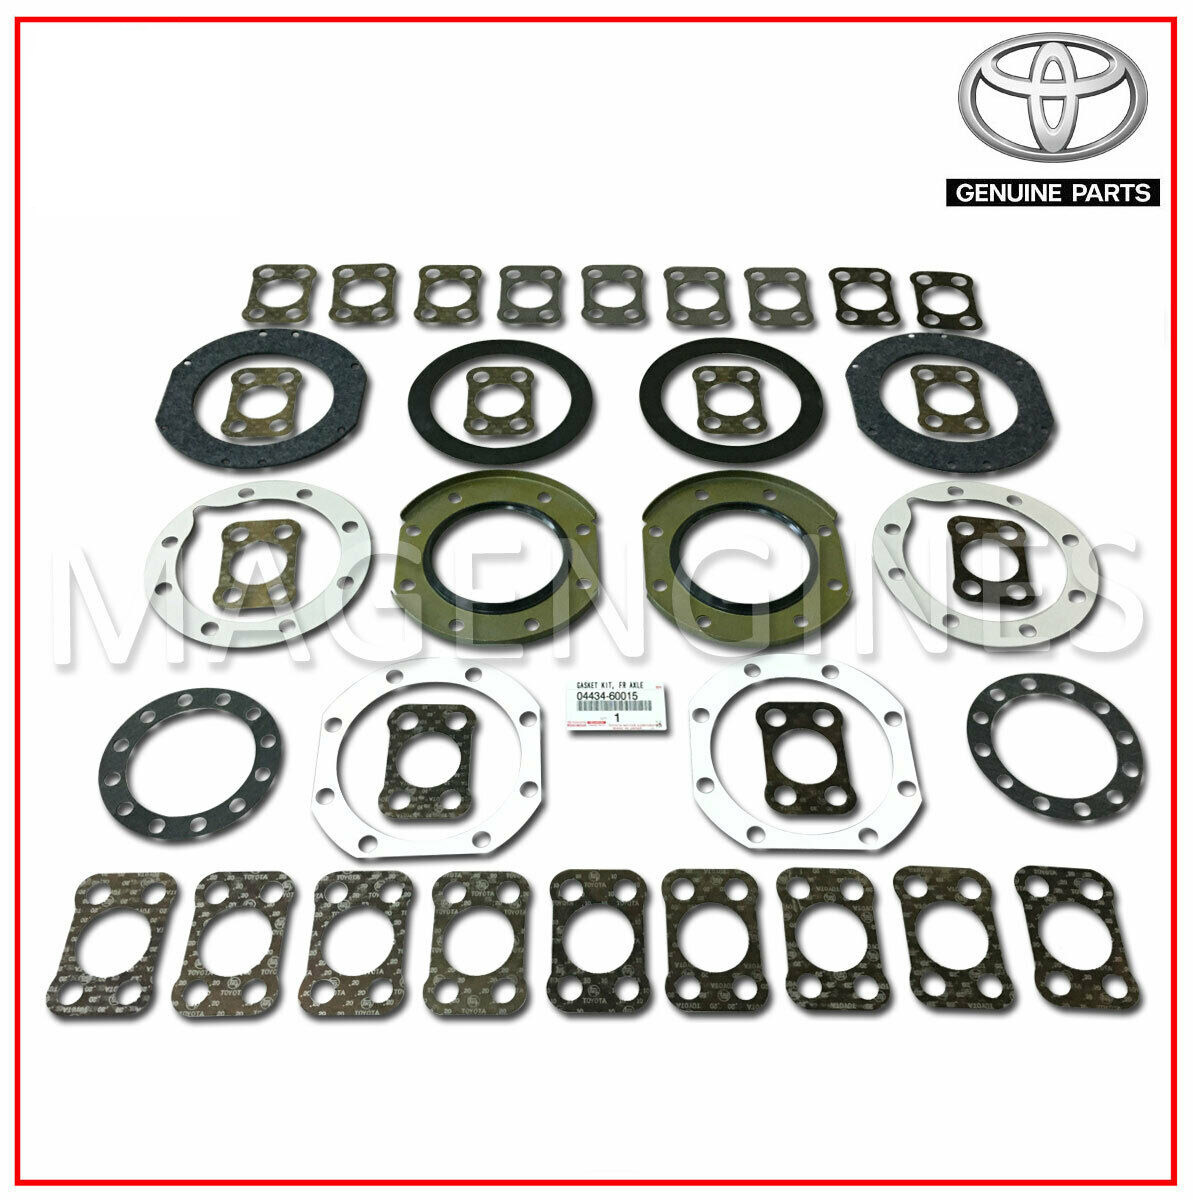 Gasket Kit 04434-60012 Genuine Toyota Parts 